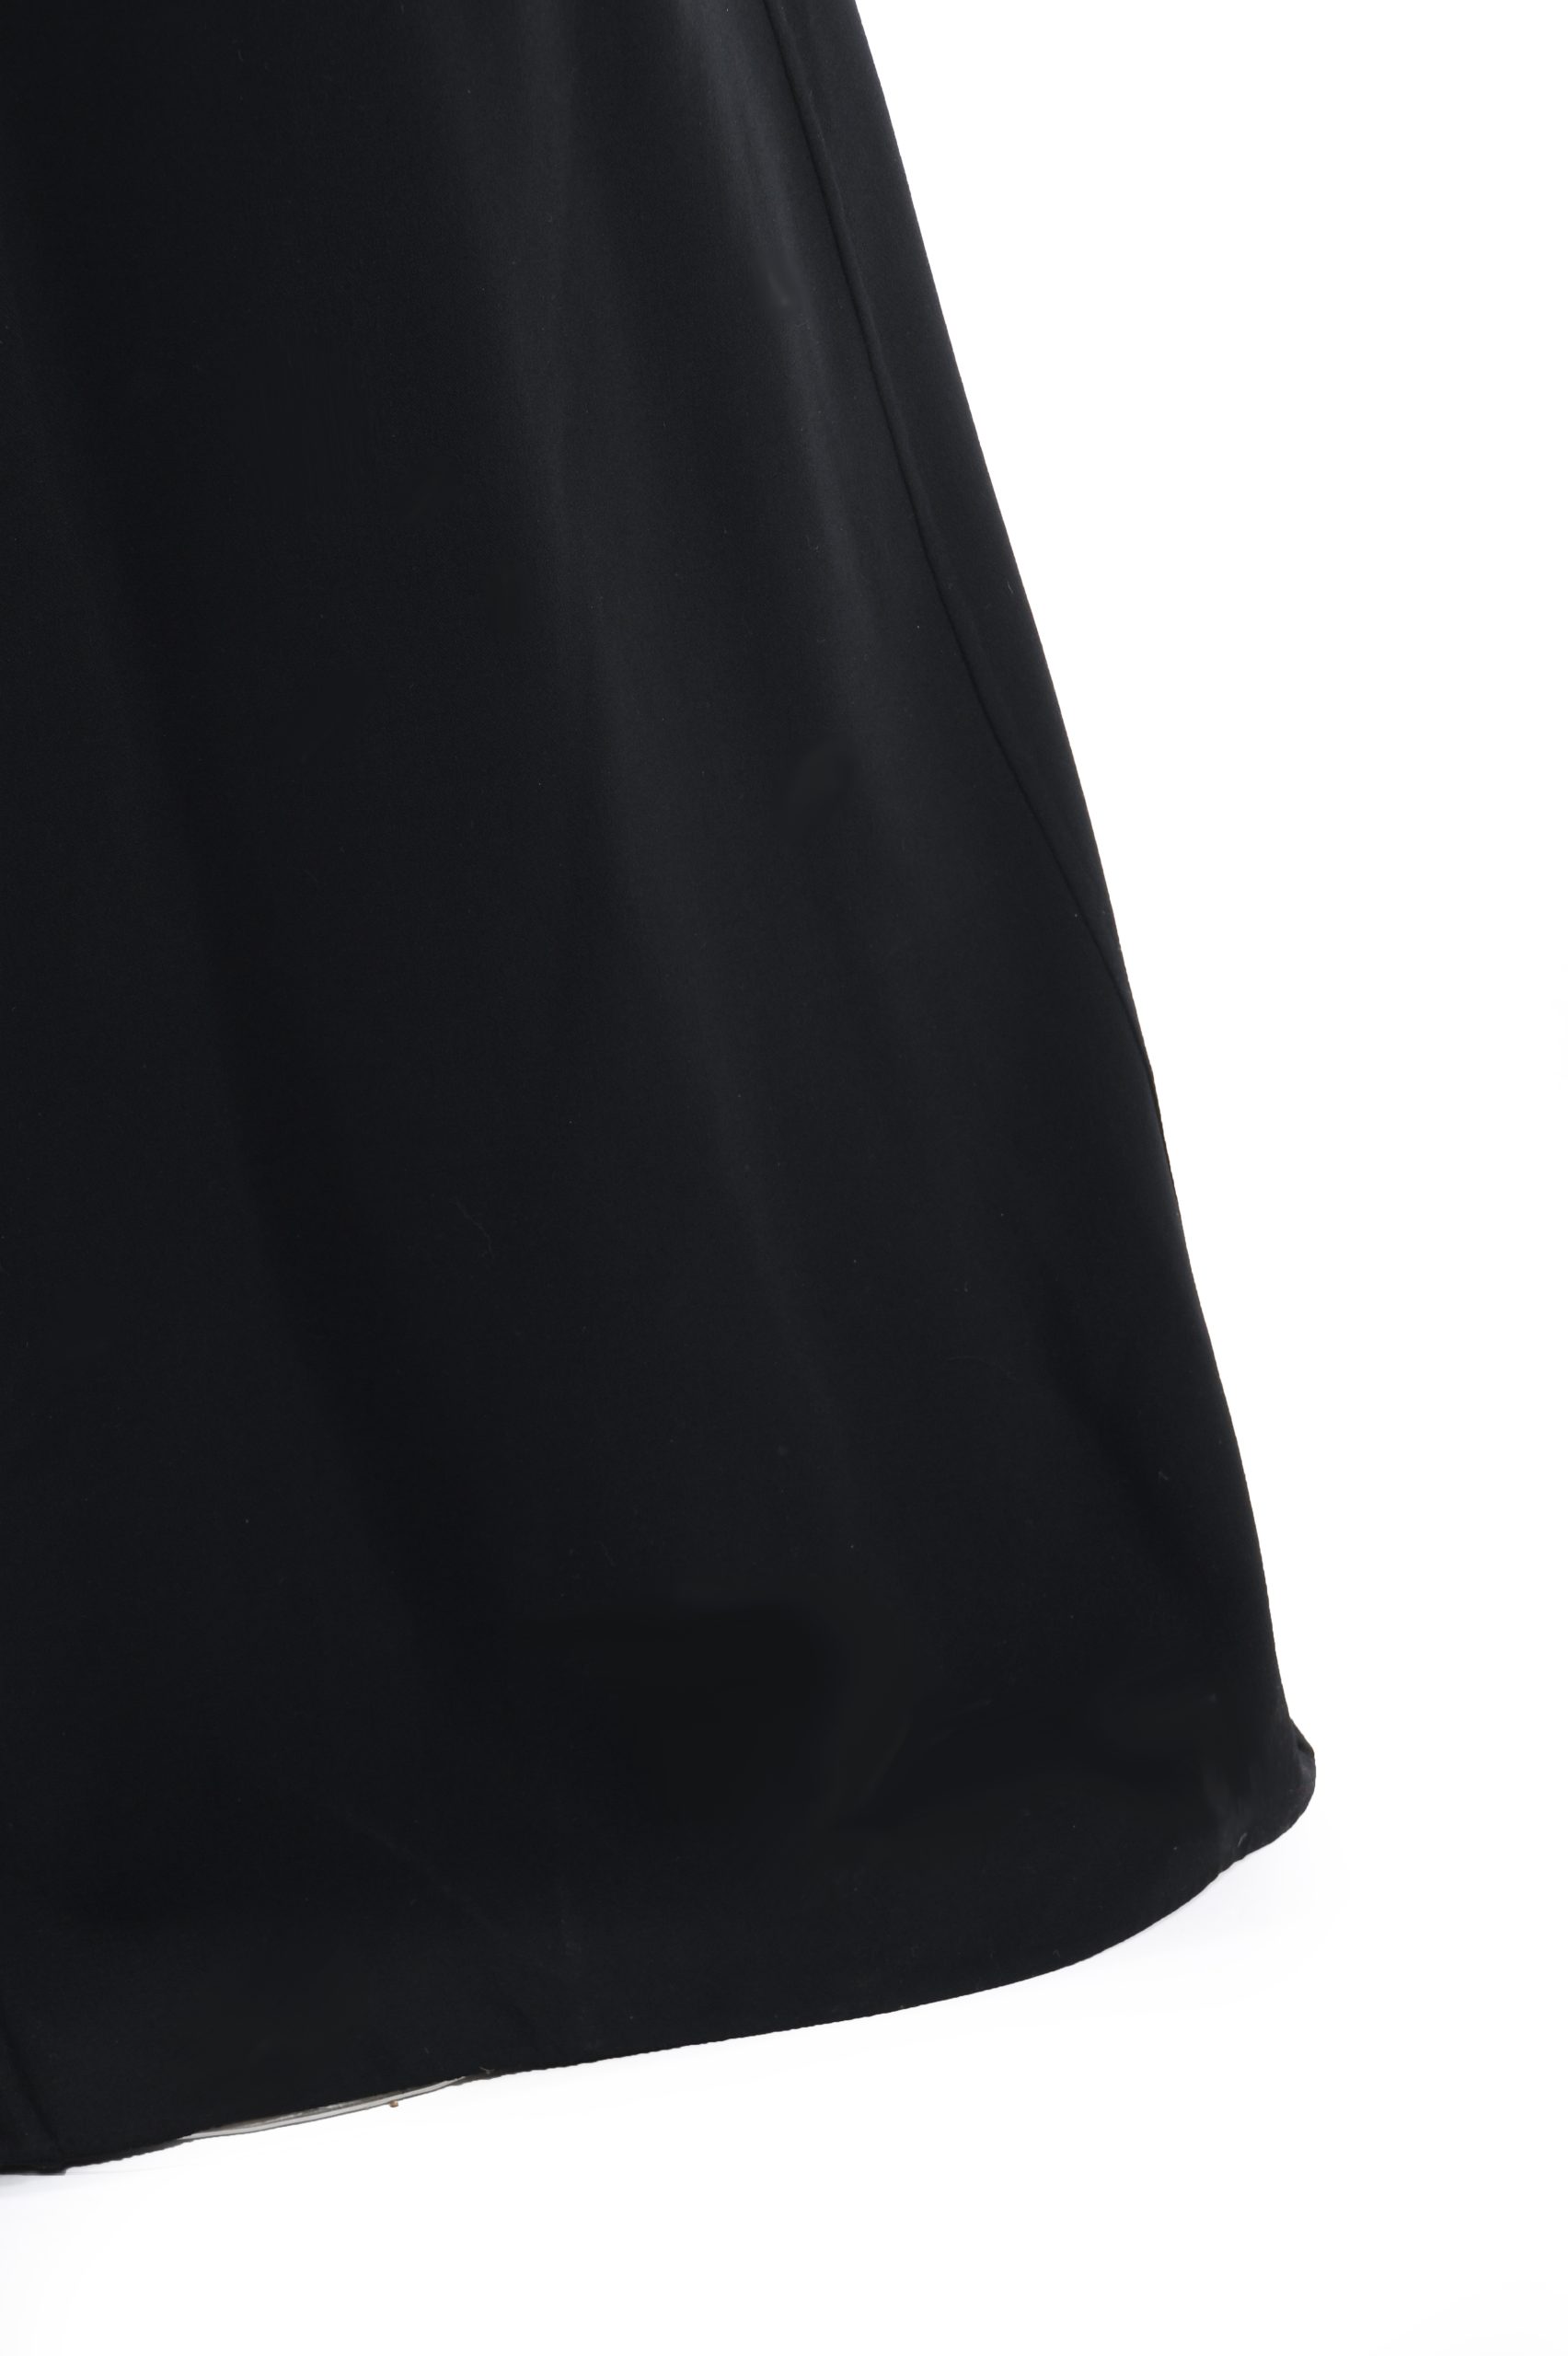 Michael Kors Cutout Gown - Janet Mandell